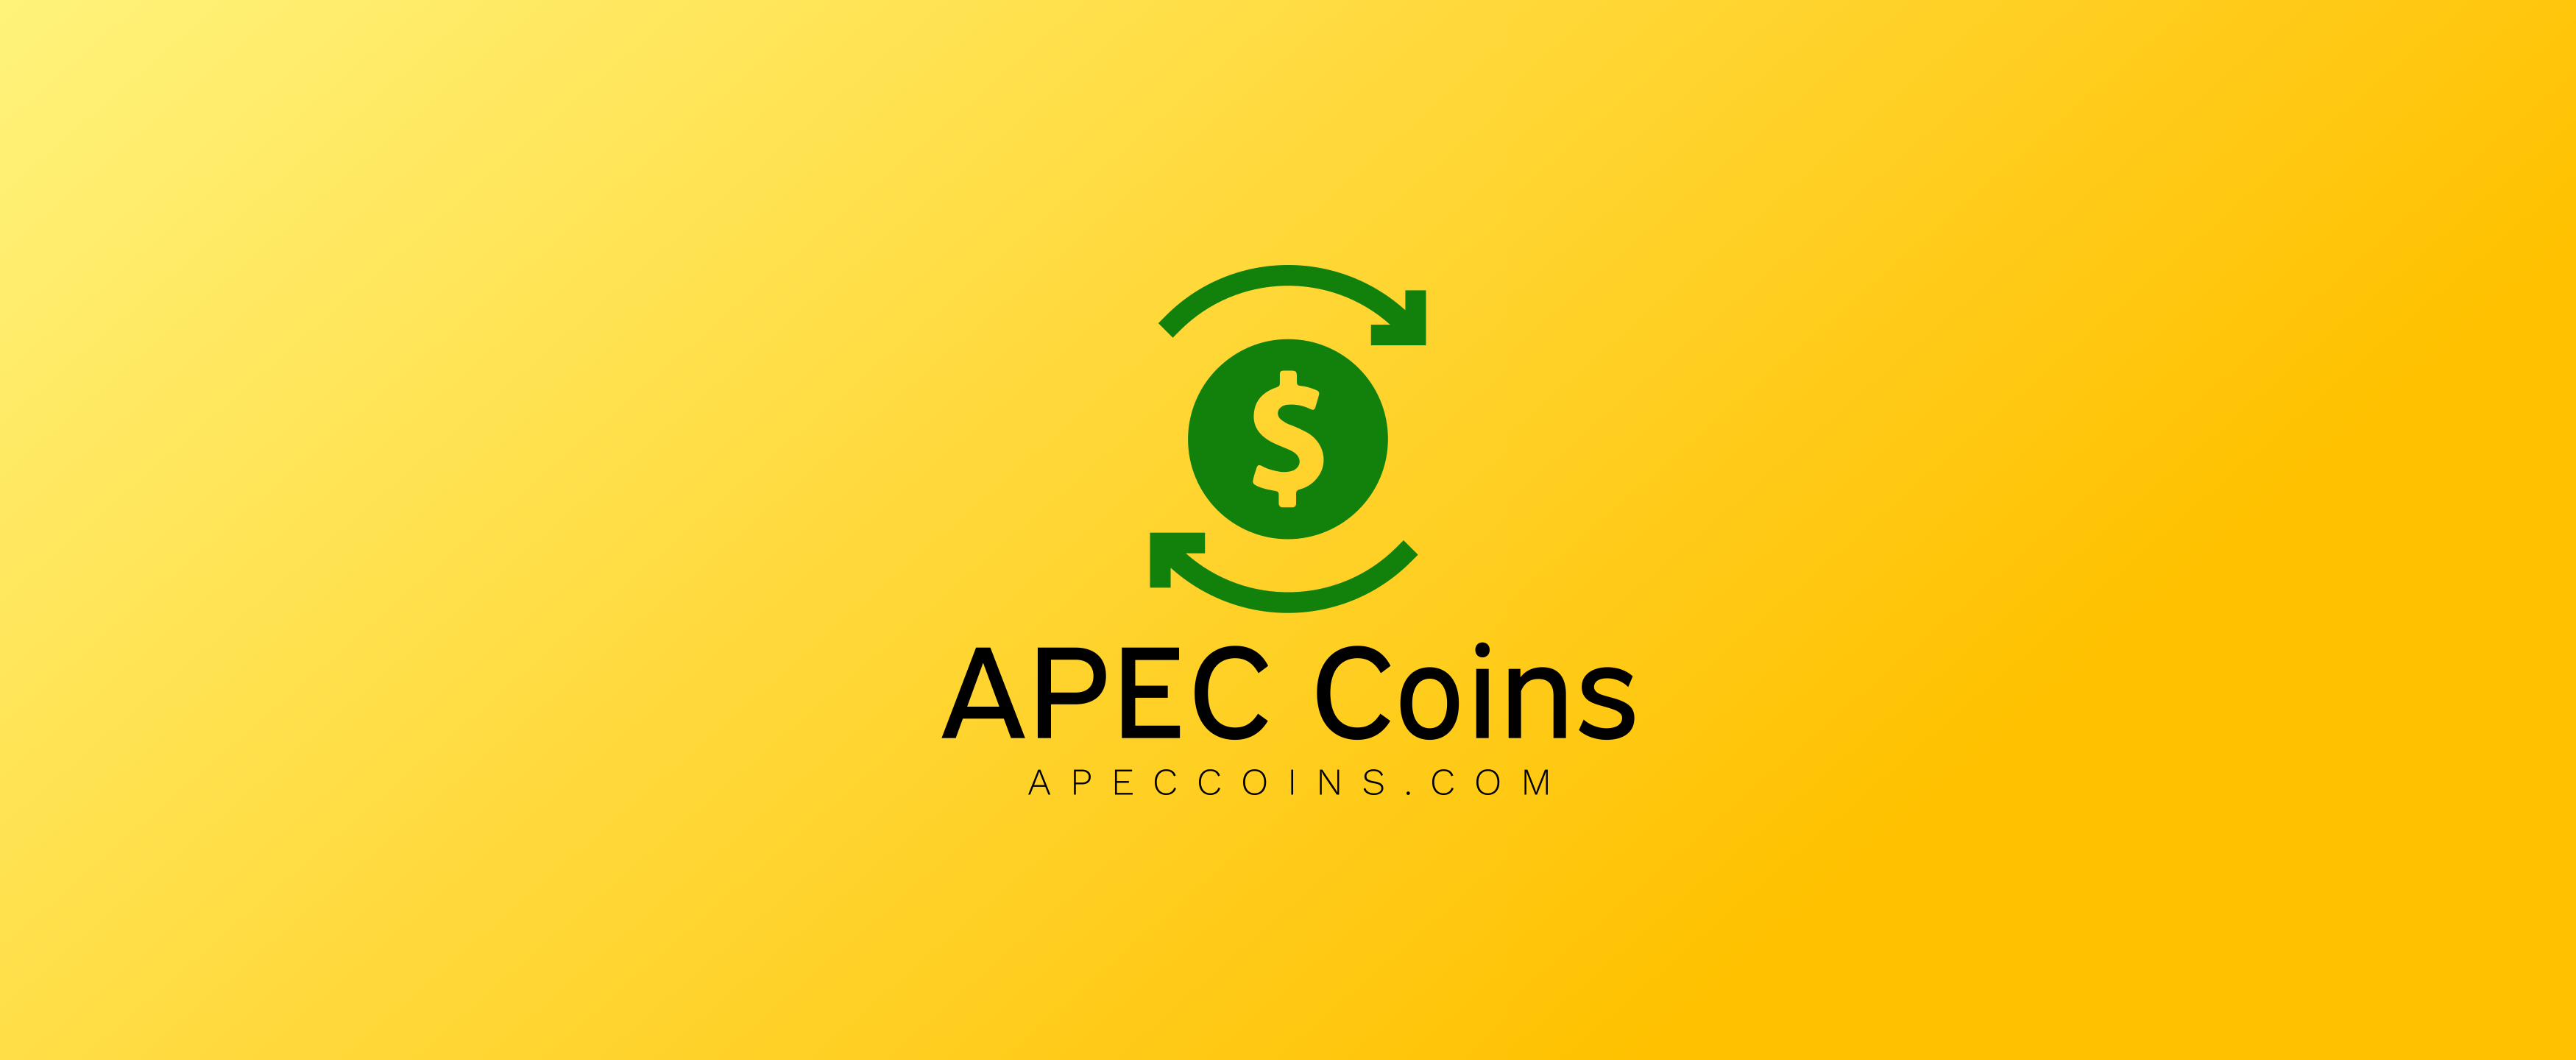 APEC Coins